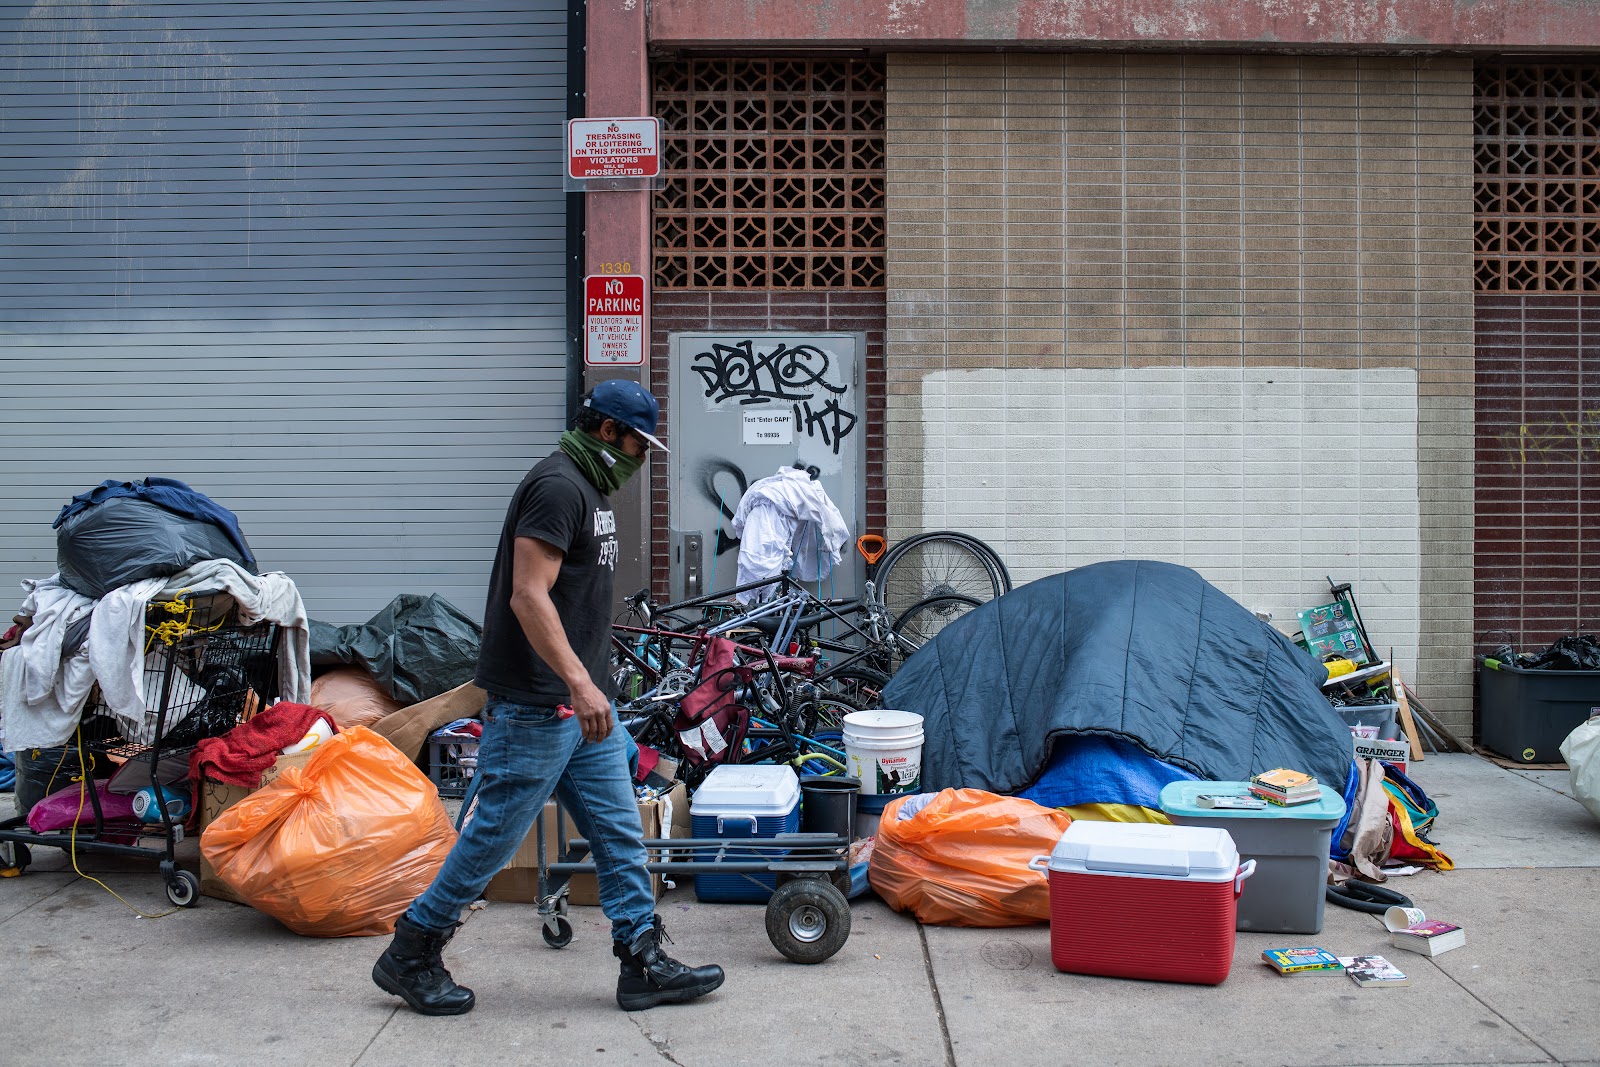 Image of homeless camp on sidewalk